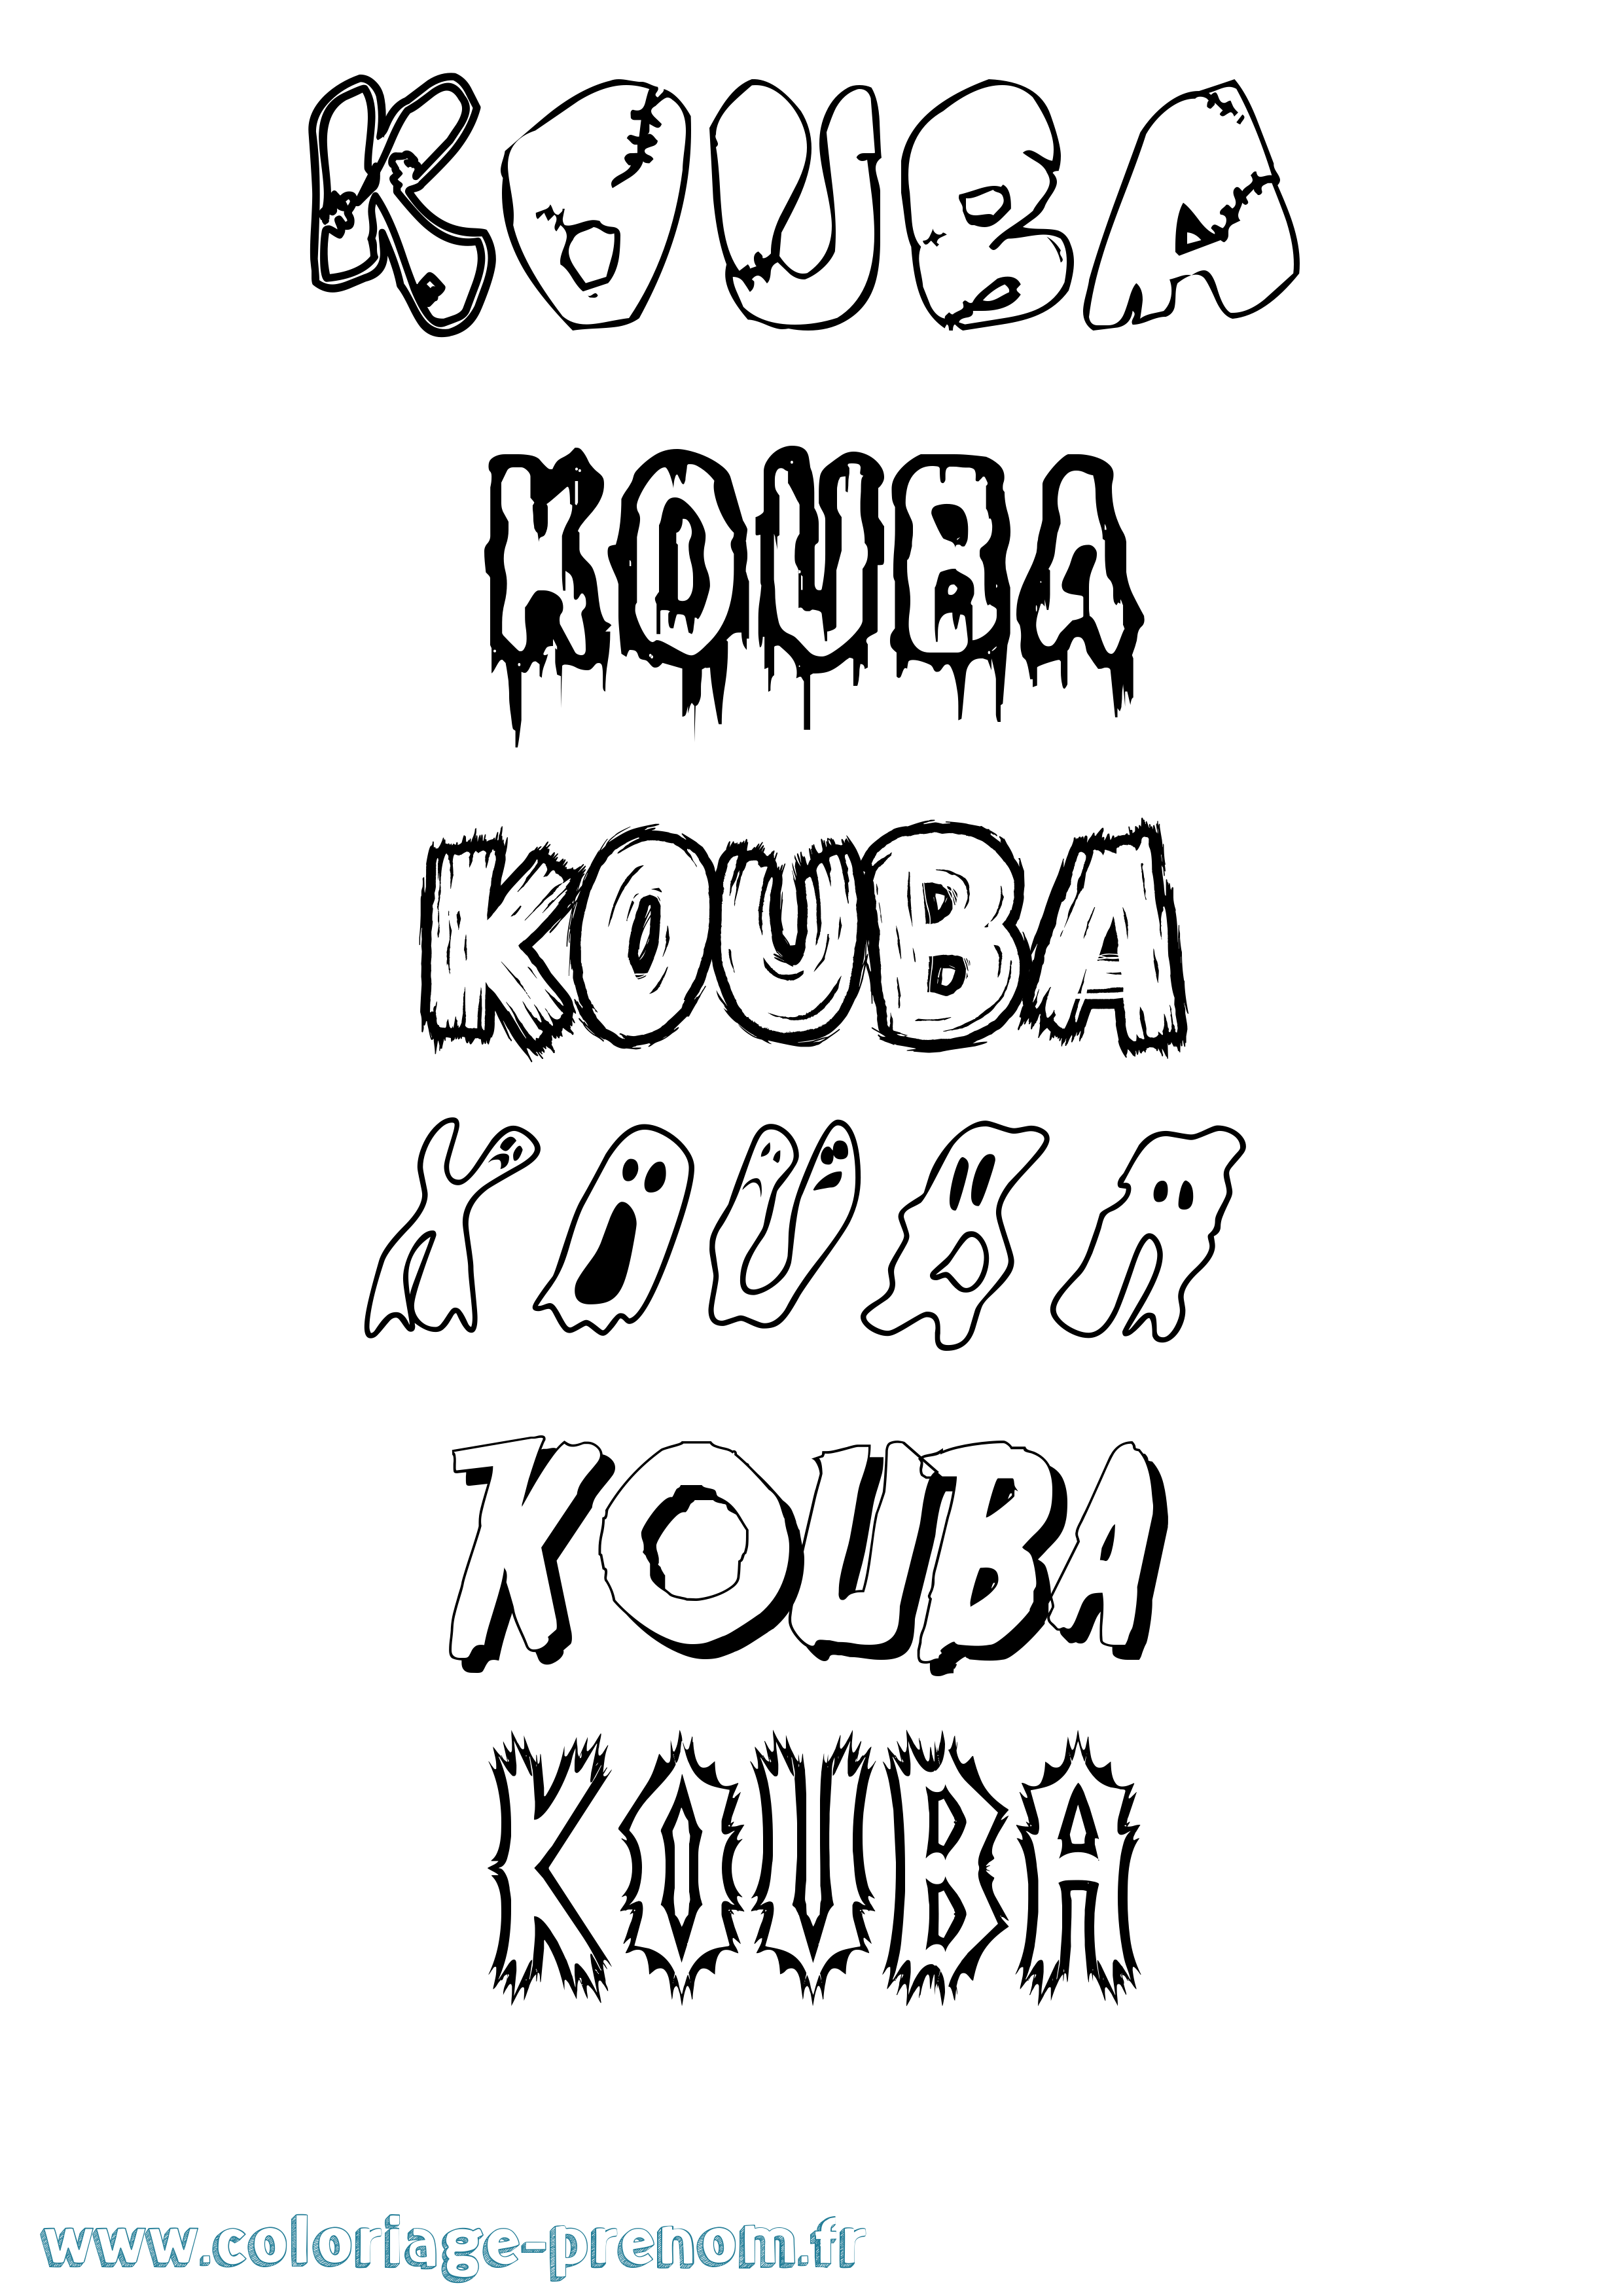 Coloriage prénom Kouba Frisson